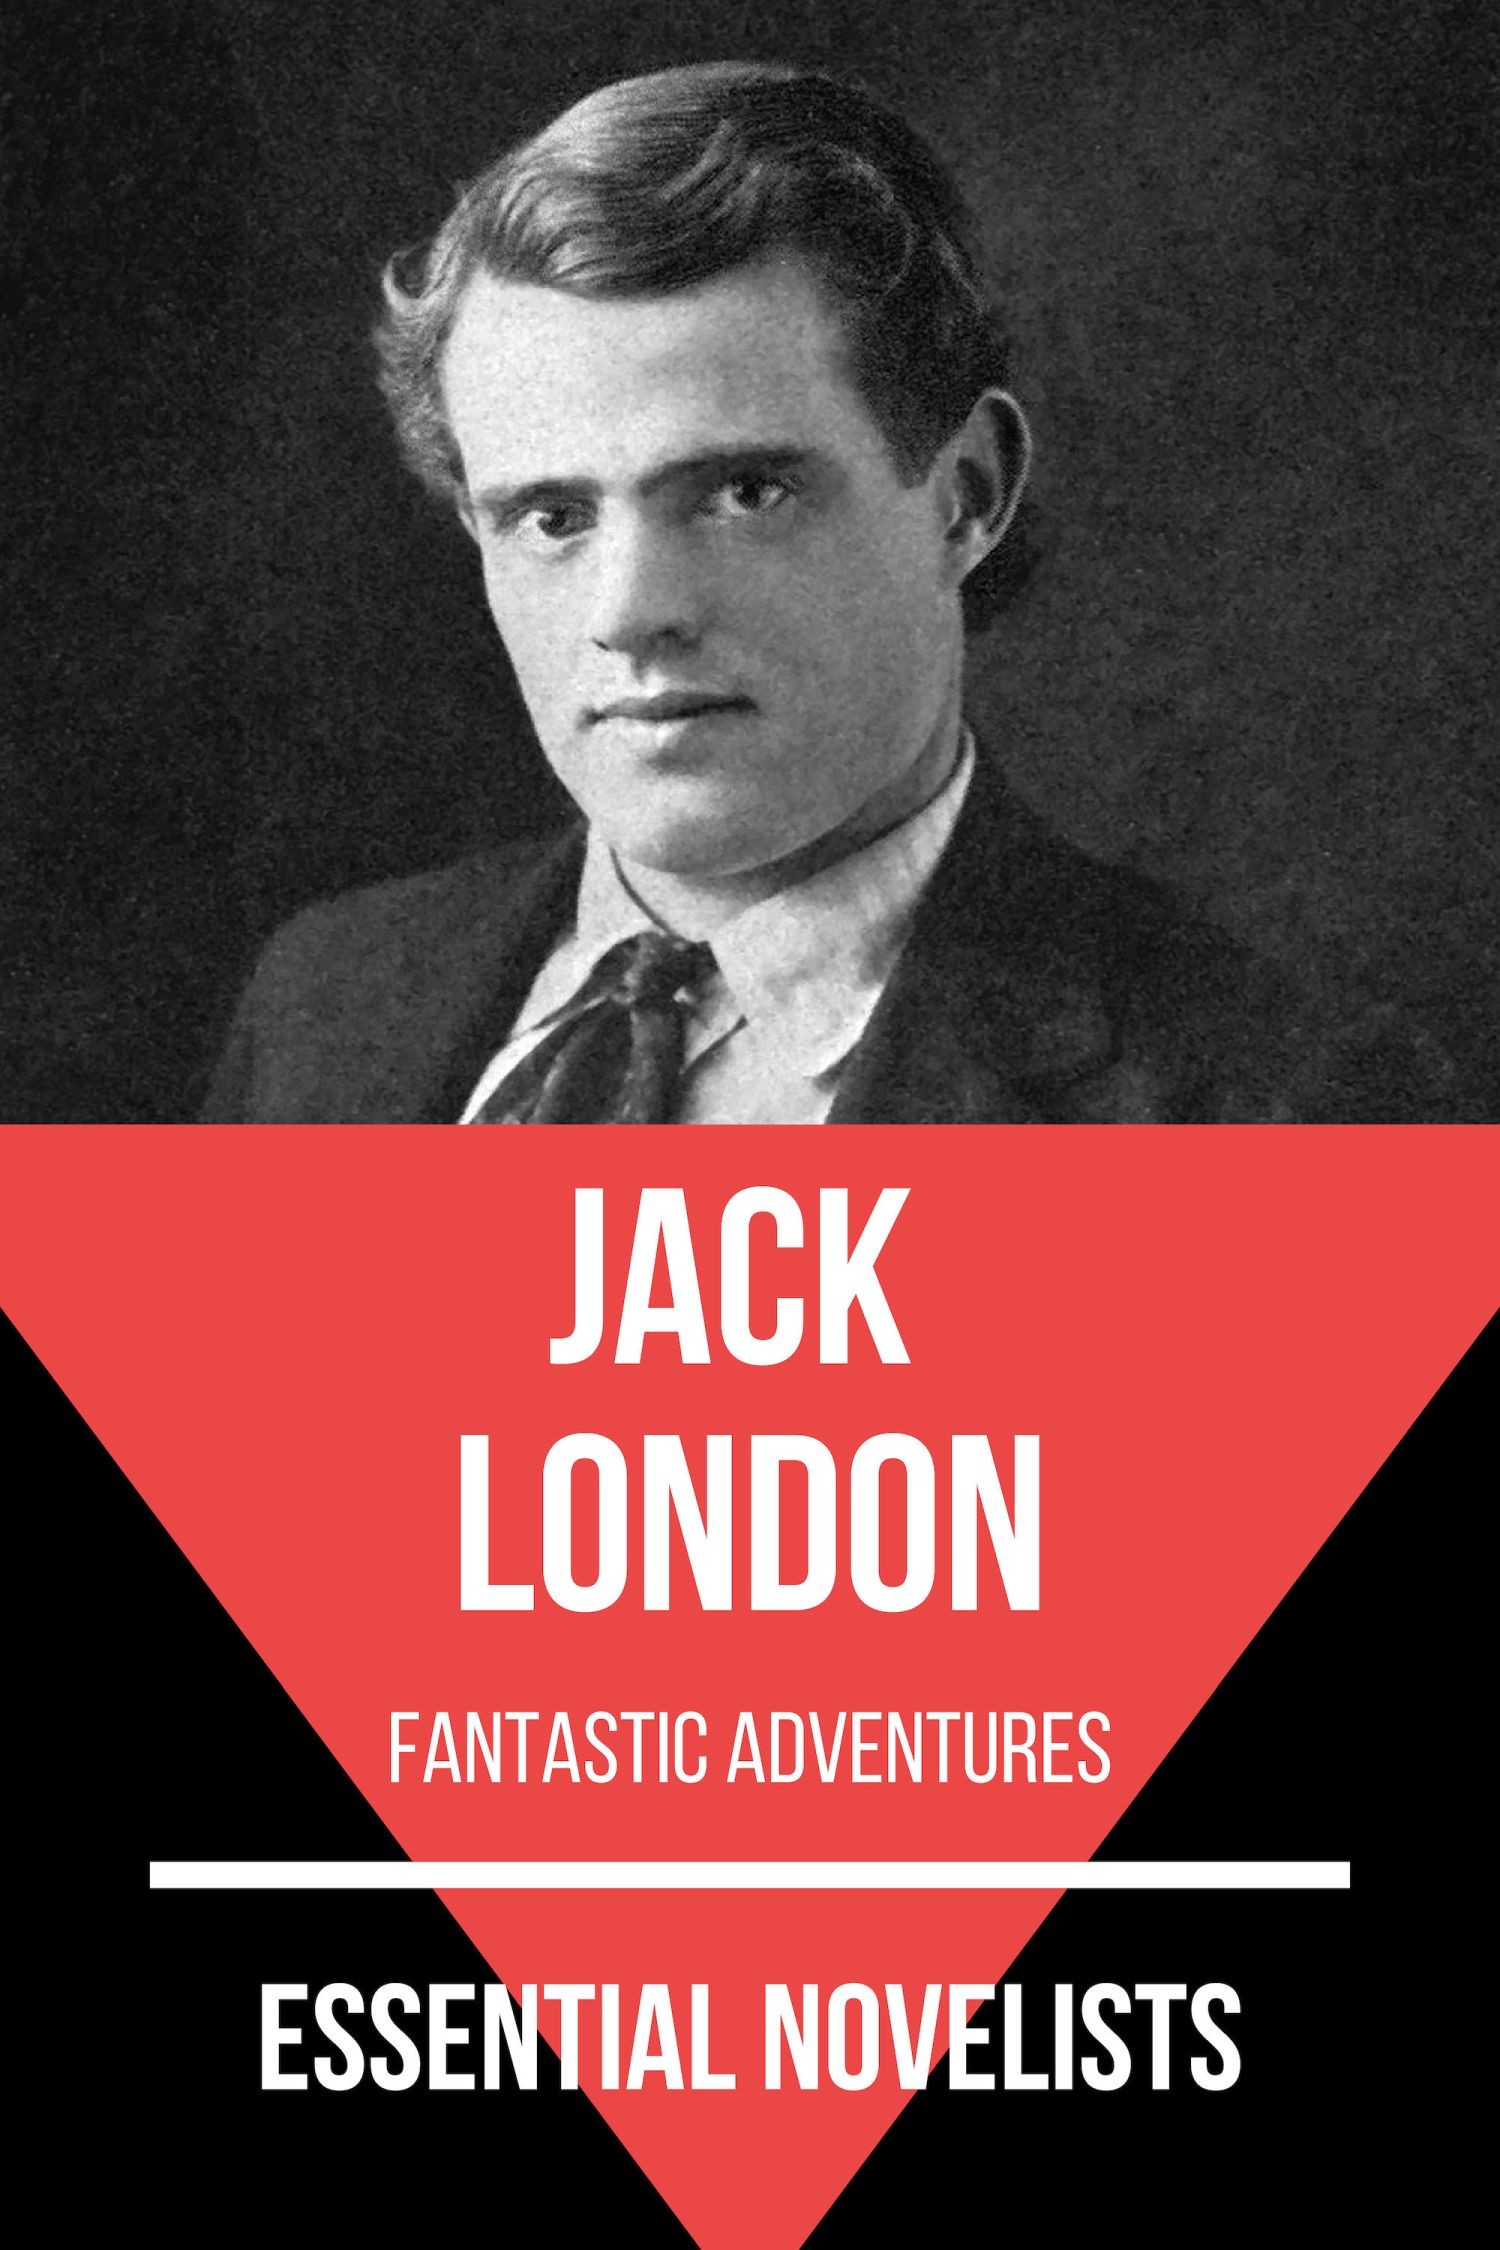 Essential Novelists - Jack London